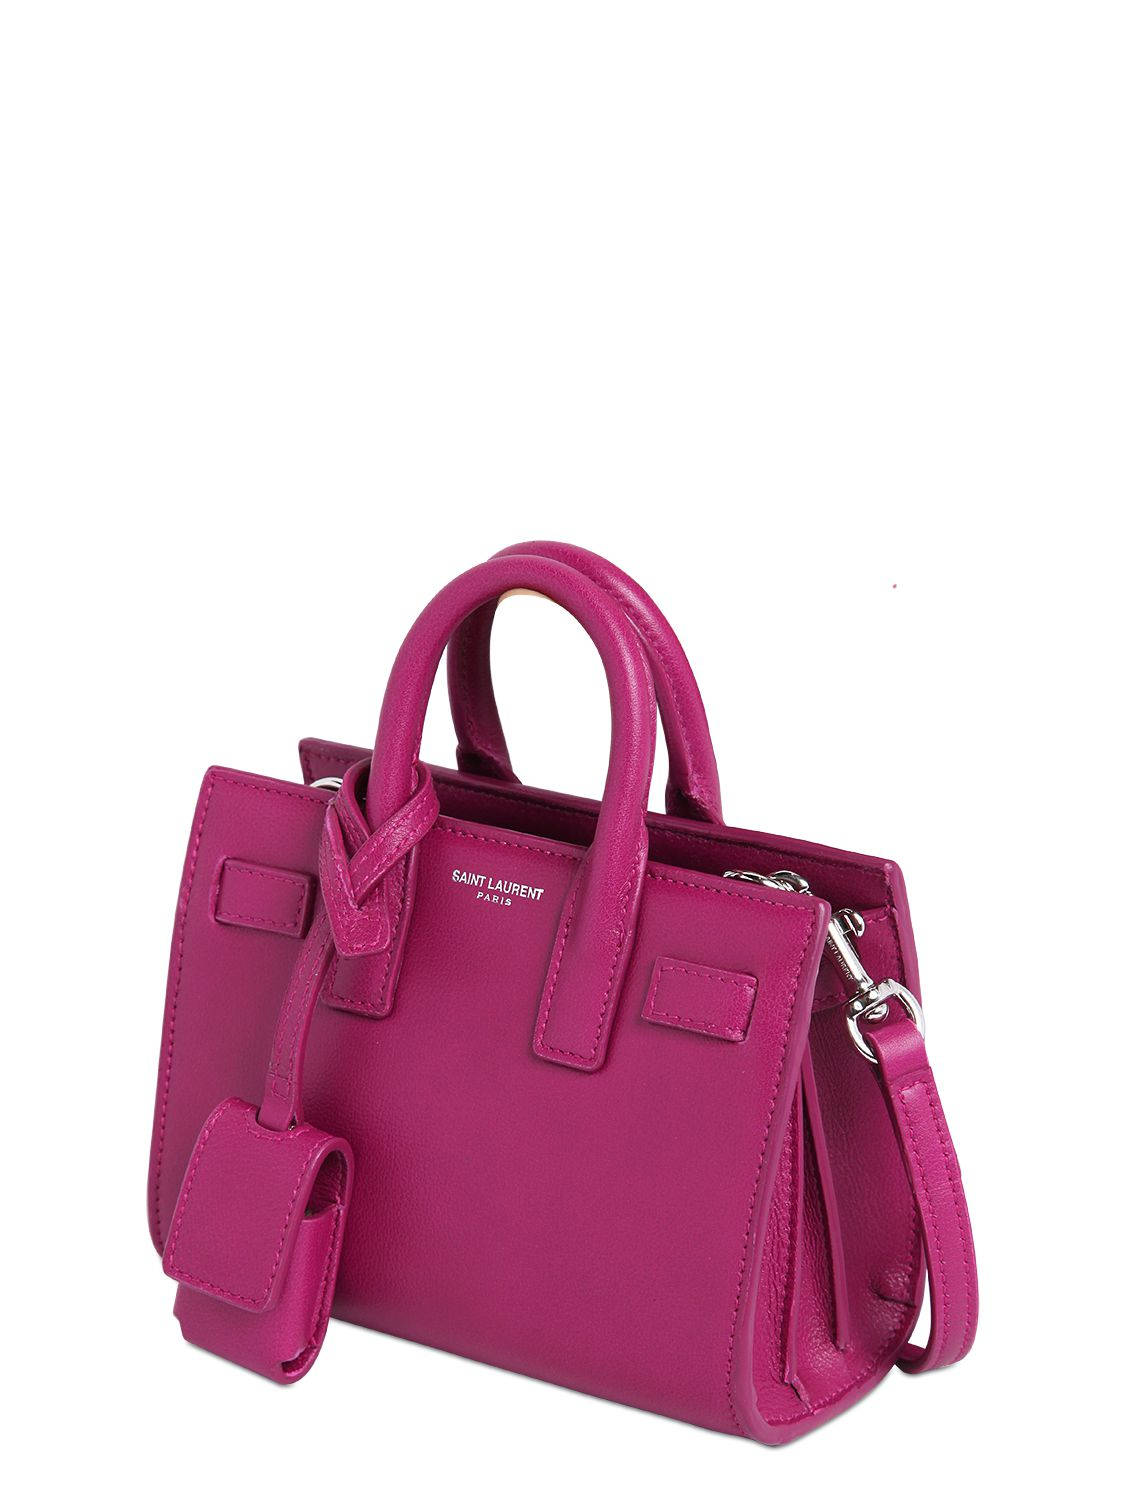 Saint laurent Toy Sac De Jour Leather Shoulder Bag in Pink ...